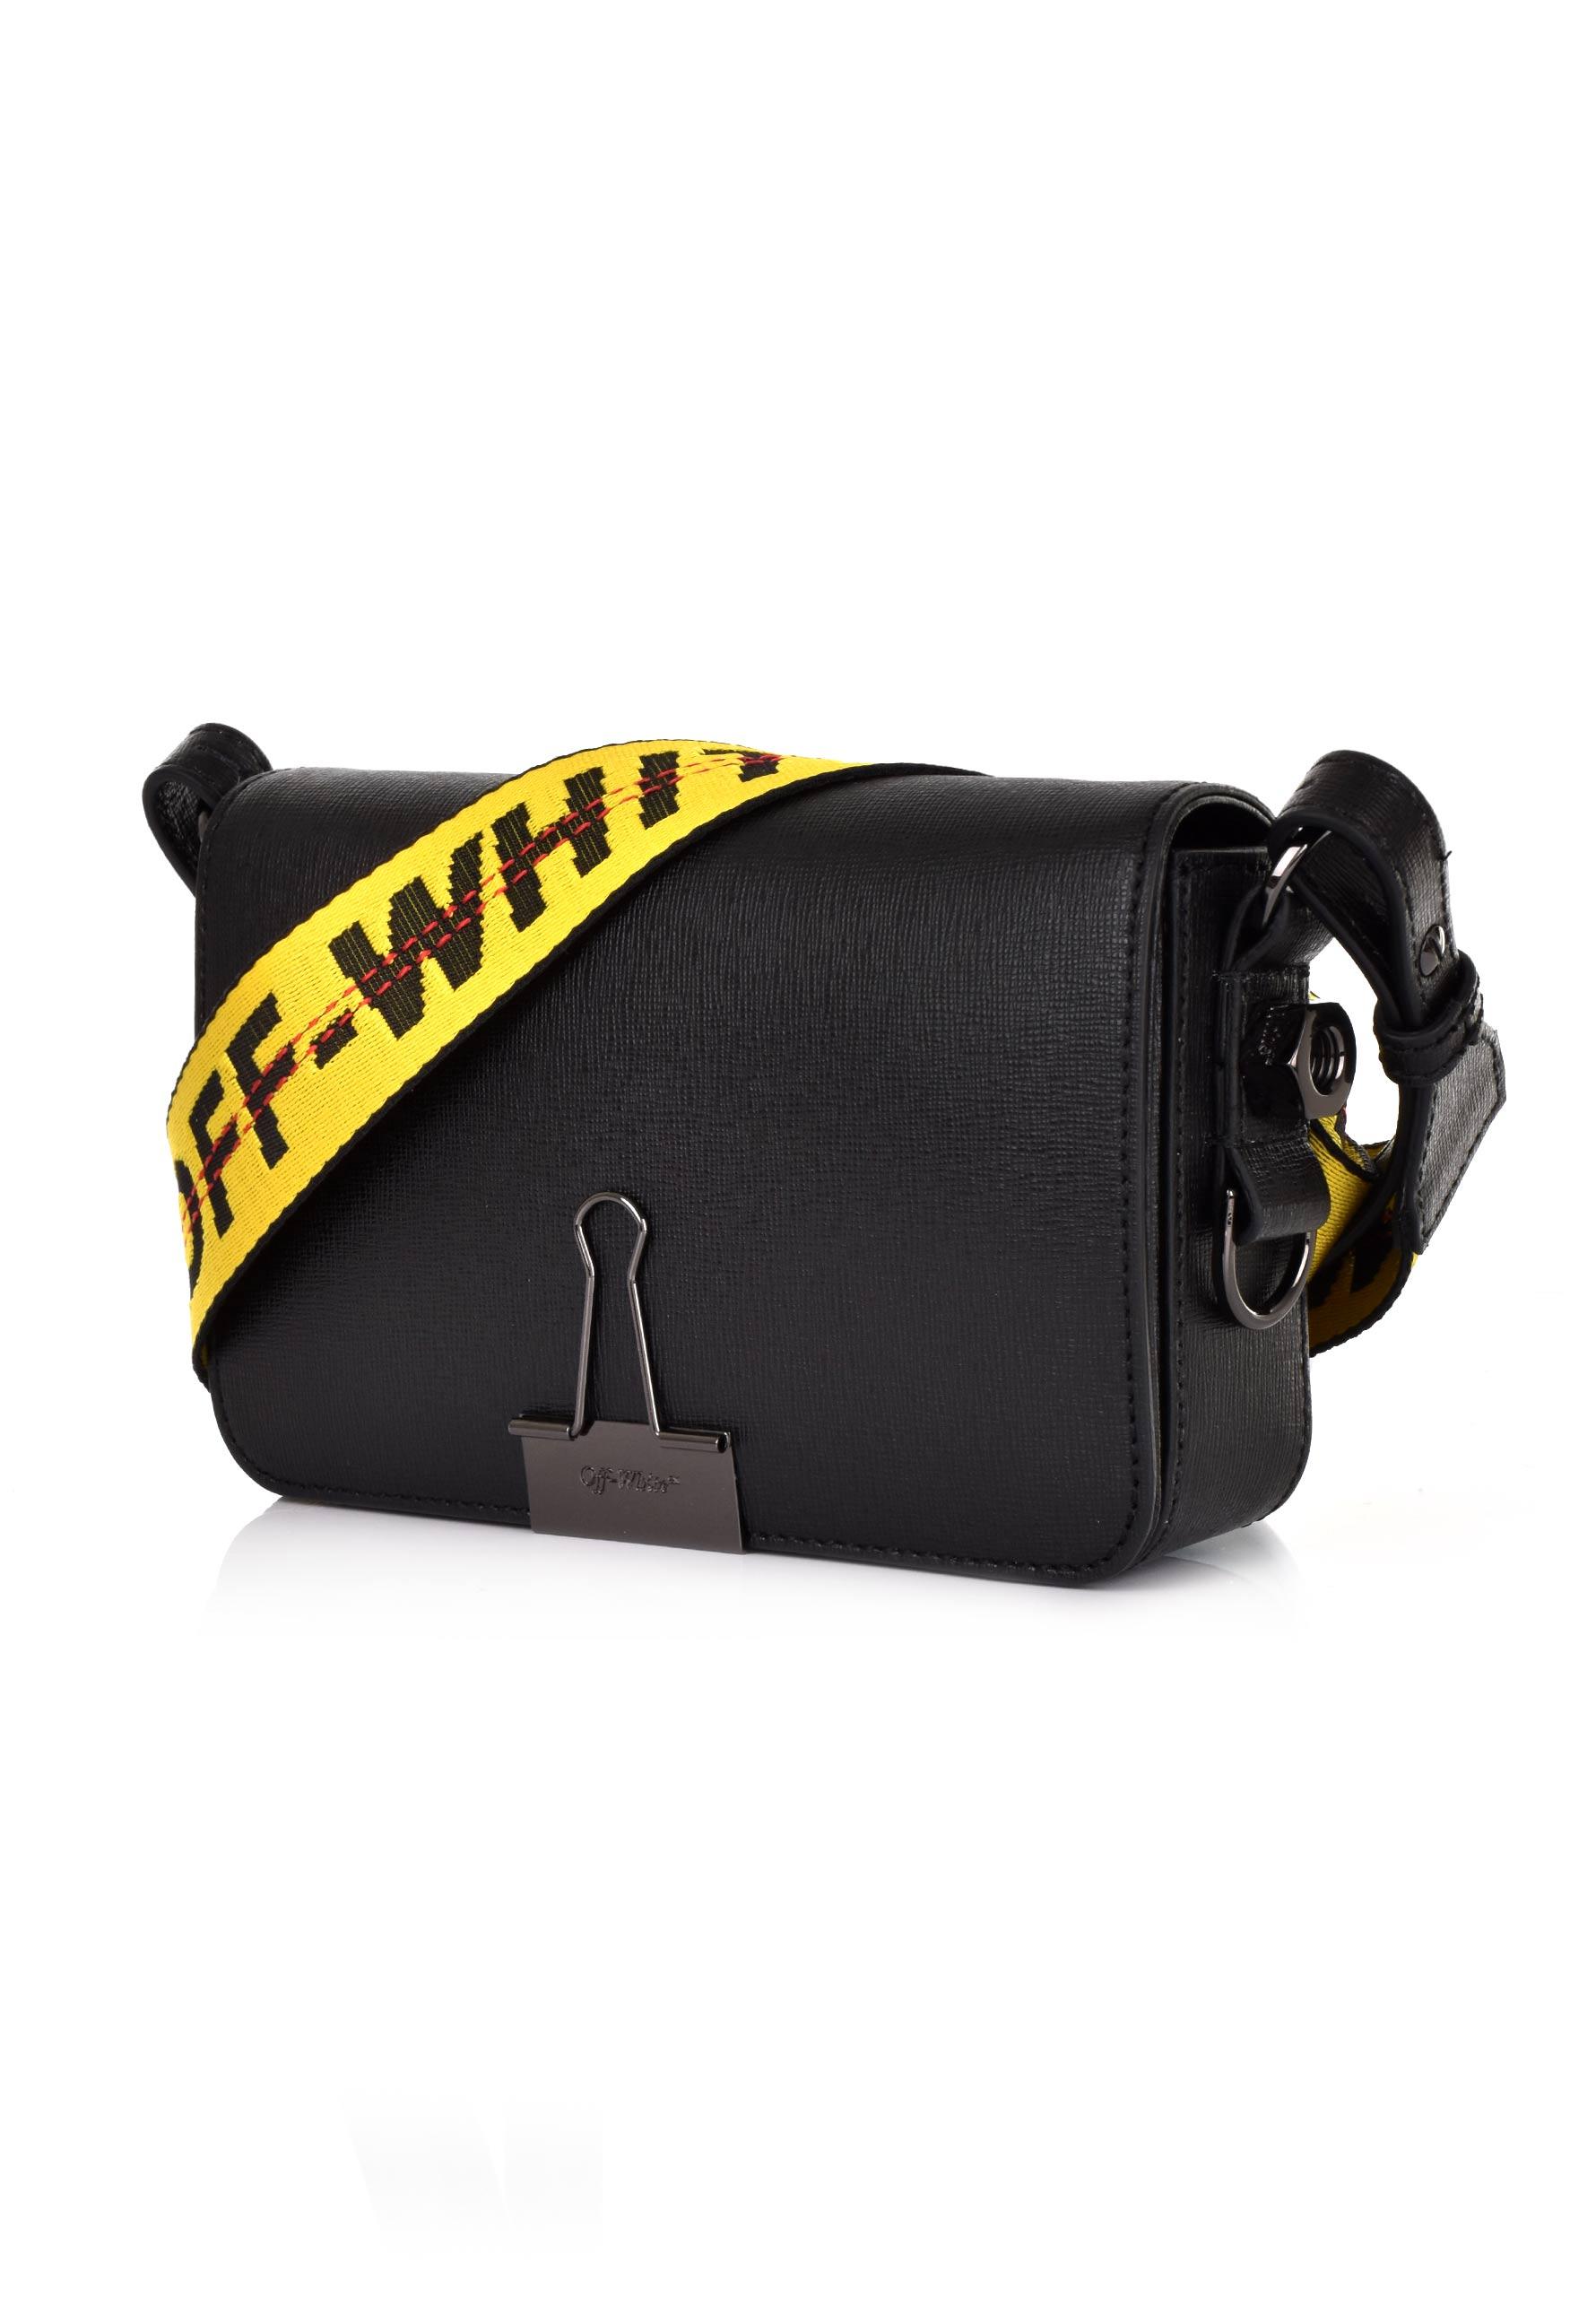 Off-White c/o Virgil Abloh Plain Mini Flap Bag With Strap Black/yellow - Lyst